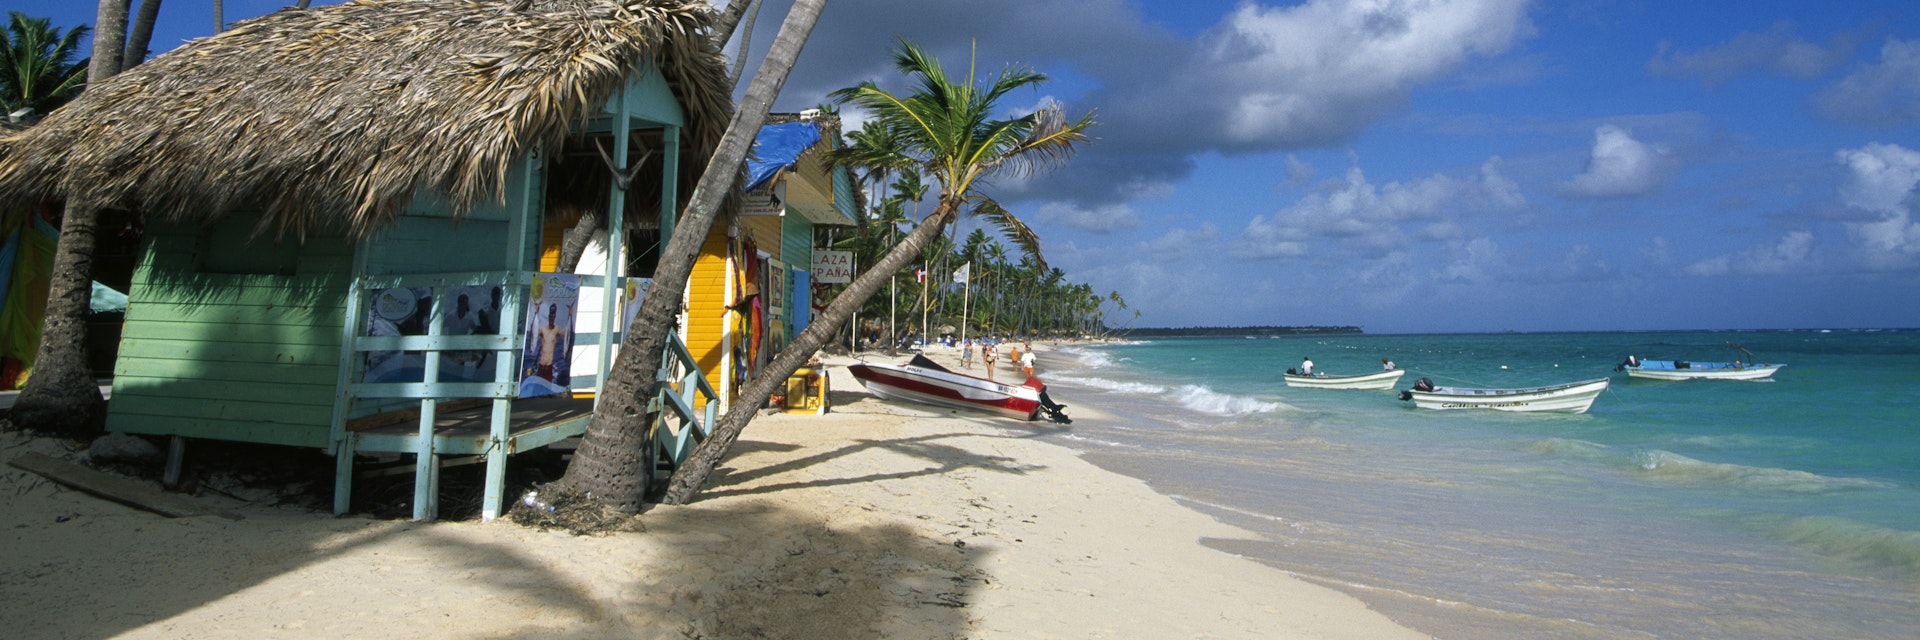 Huts on beach, Bavaro Beach, Dominican Republic